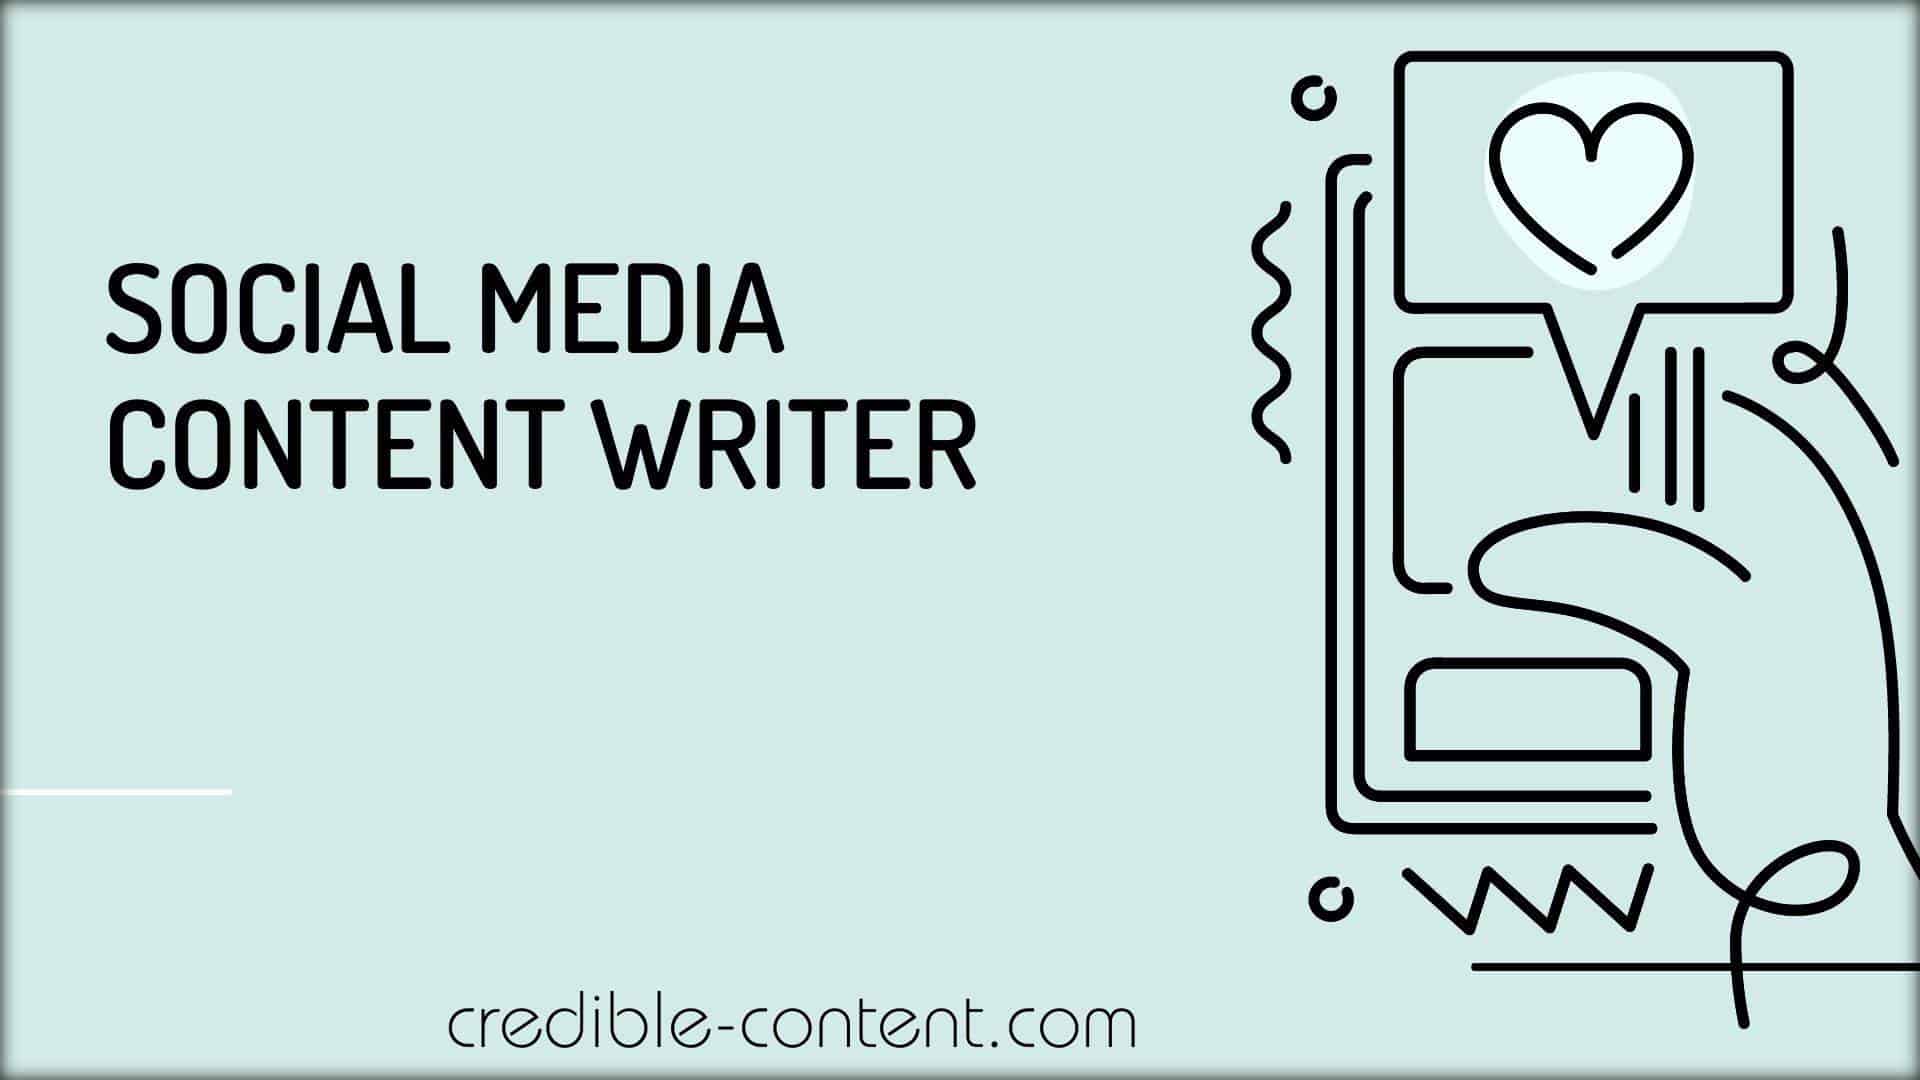 Social media content writer